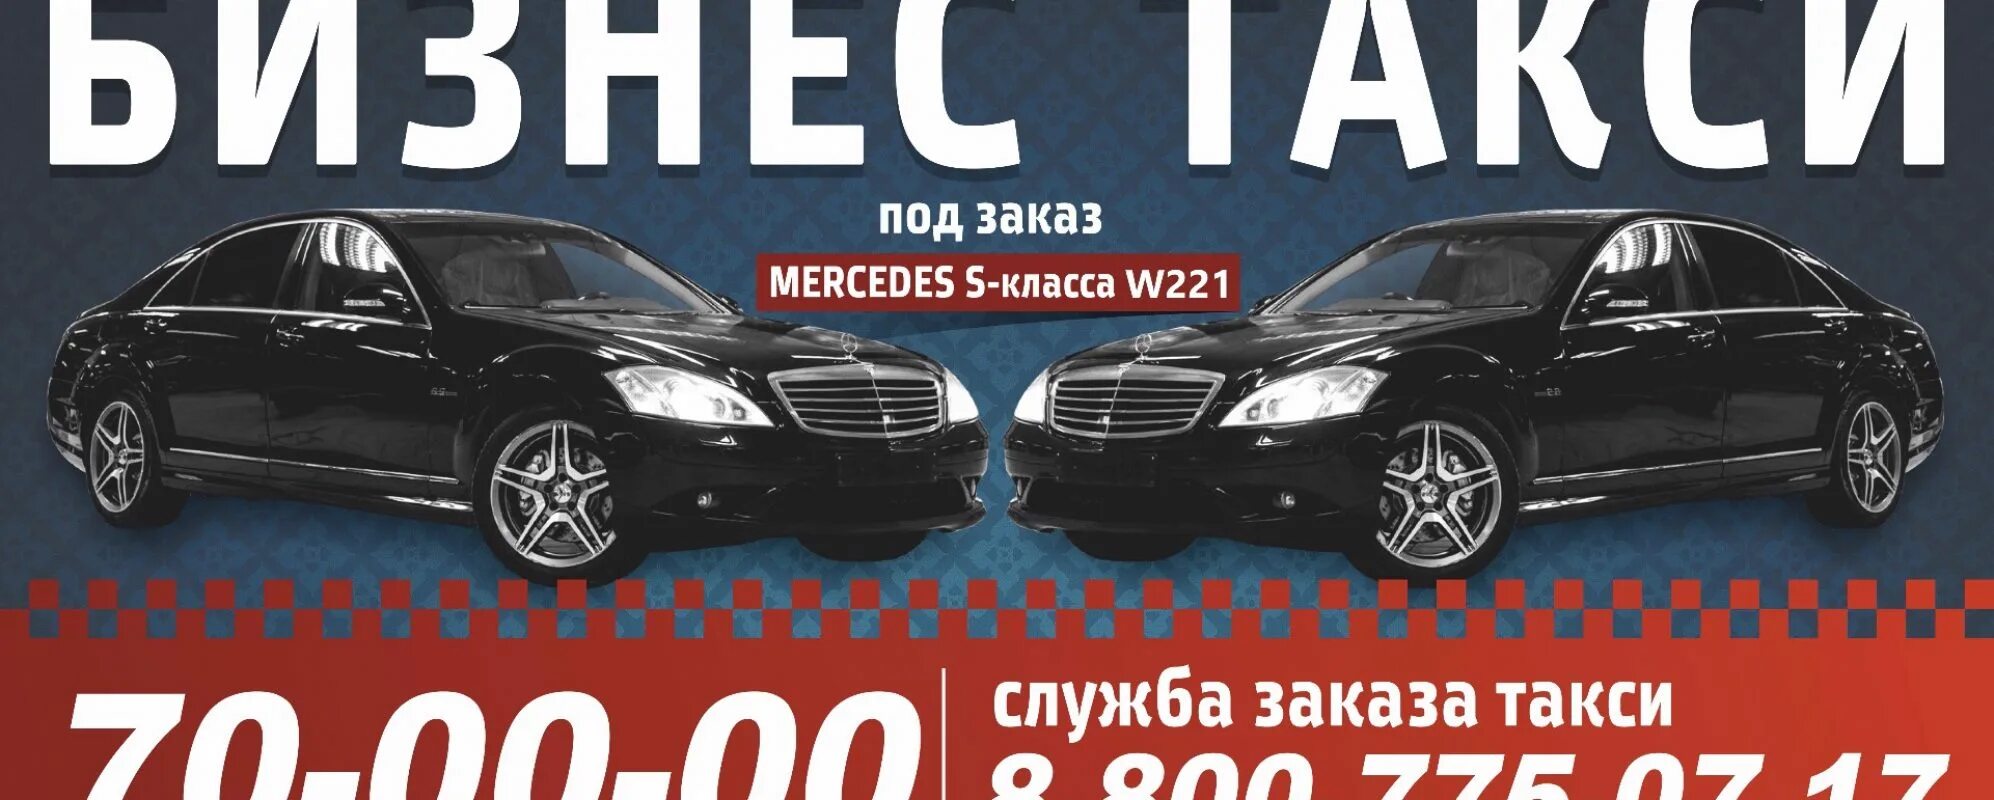 Такси бизнес класса. Бизнес такси Волгоград. Вип такси Волгоград. Такси в Волгограде номера телефонов. Заказ такси в волгограде телефоны